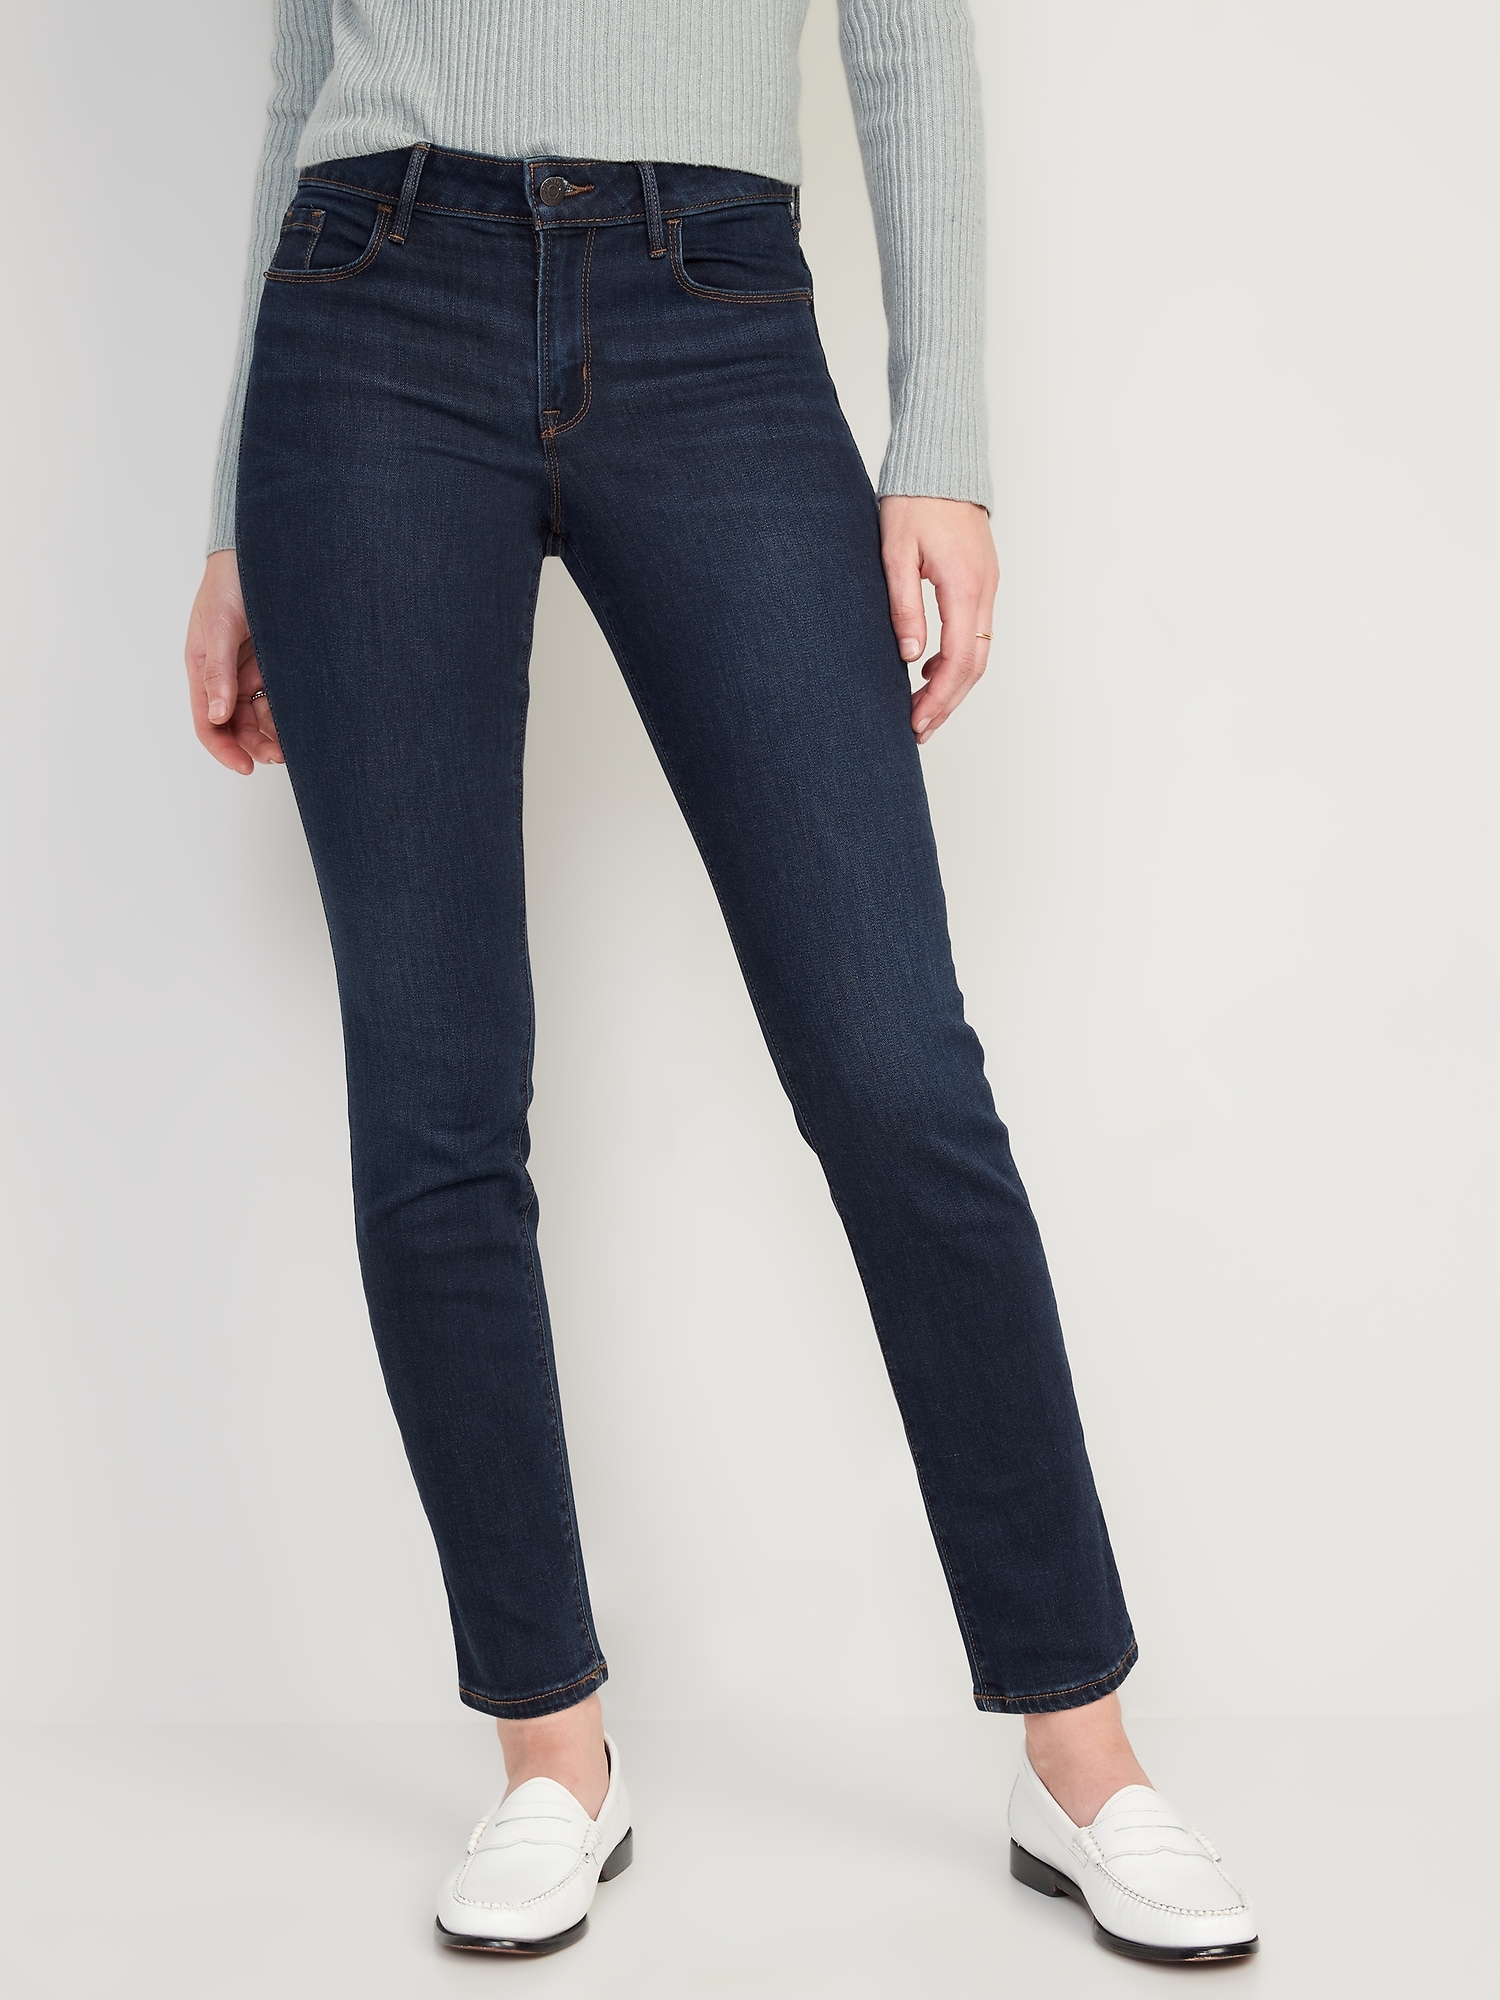 Women Jeans & Jeggings | Buy Jeans & Jeggings for Women Online - Ketch-saigonsouth.com.vn